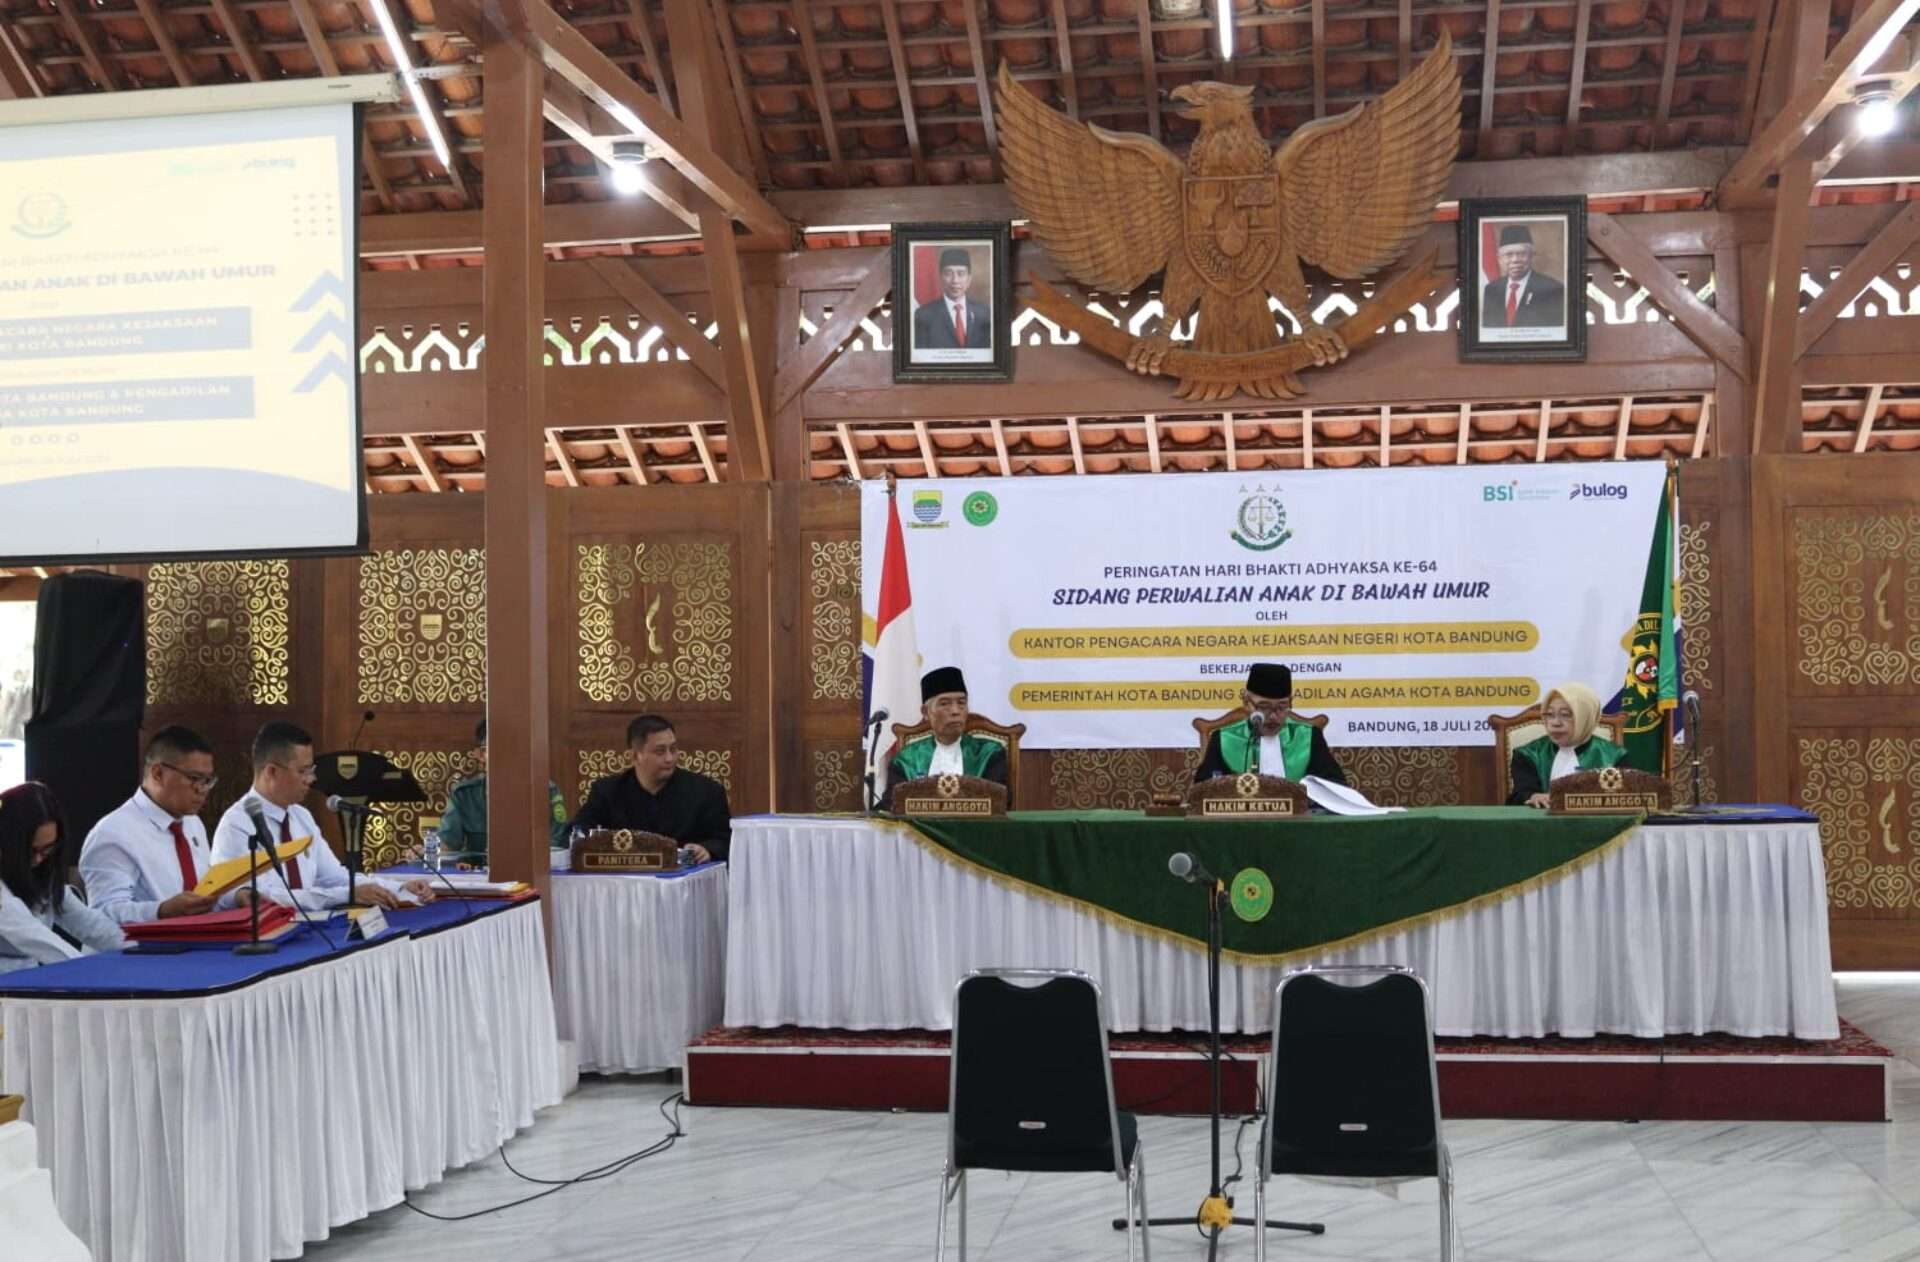 Sidang Permohonan Perwalian Anak Pertama Kali di Indonesia Digelar di Luar Pengadilan